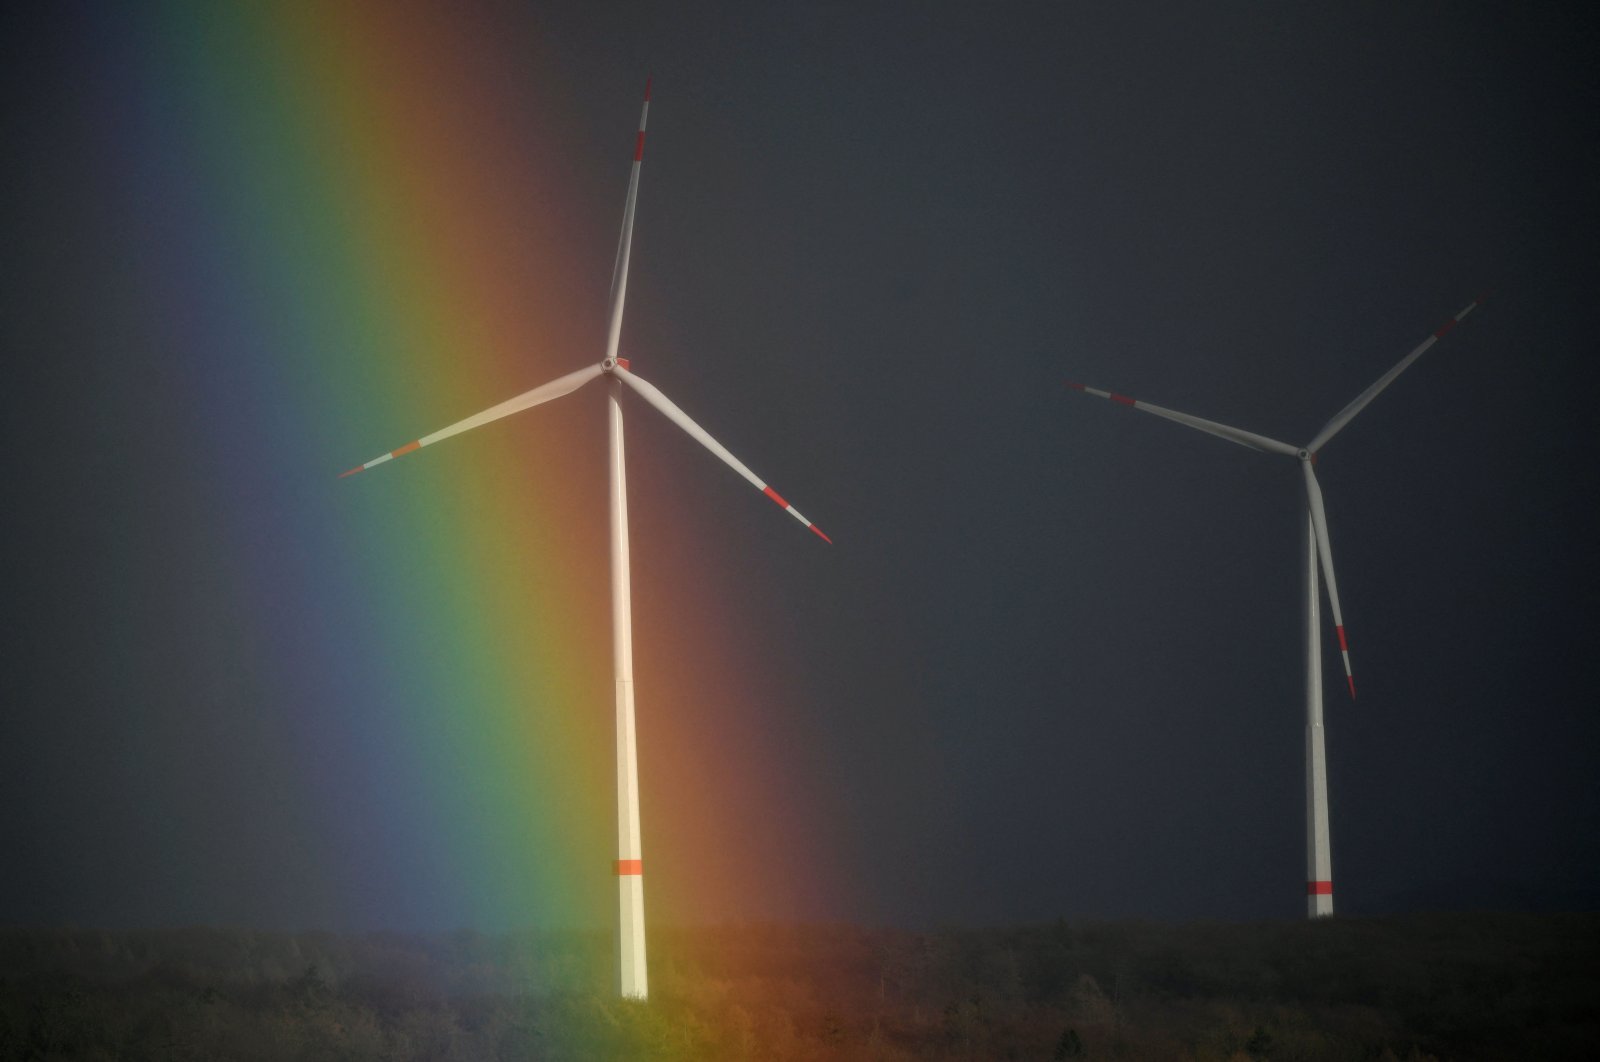 A rainbow is seen behind wind turbines near Breuna, western Germany, Feb. 17, 2022. (AFP Photo)